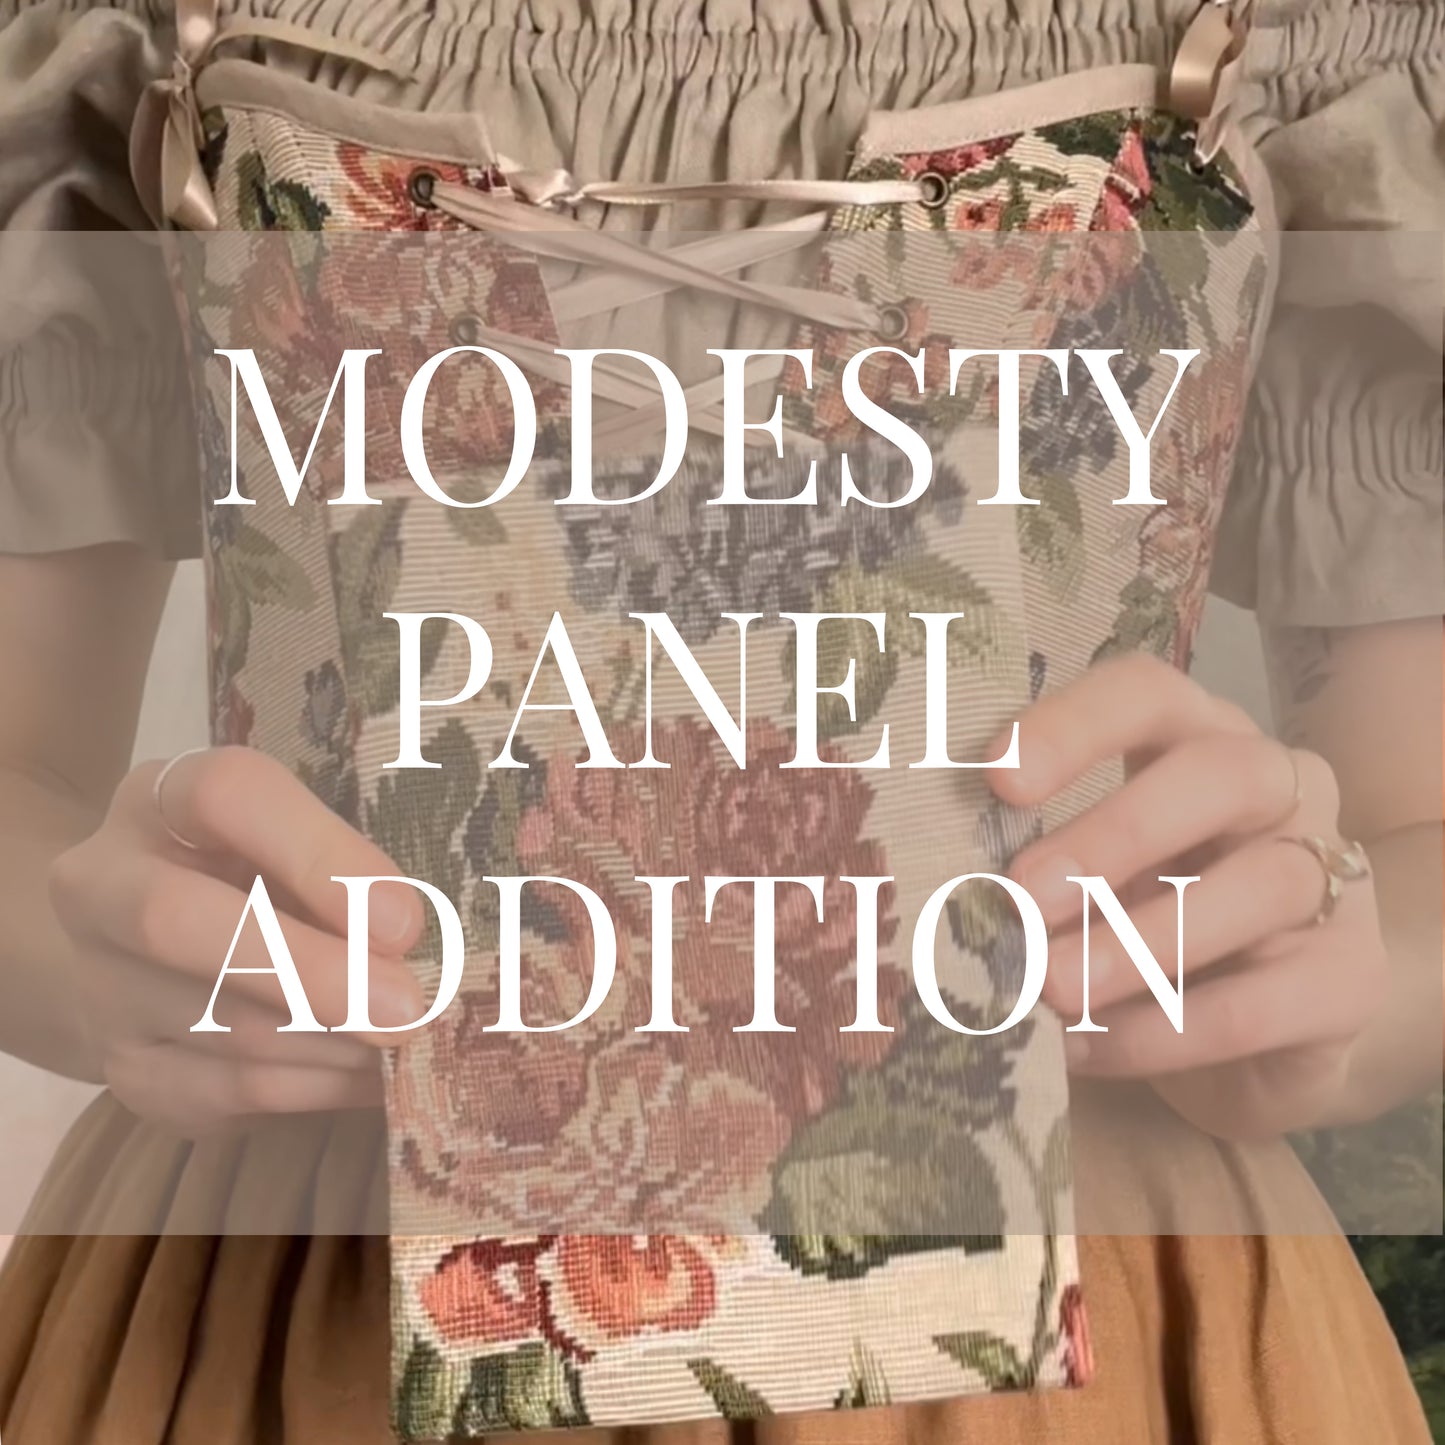 Modesty Panel Addition